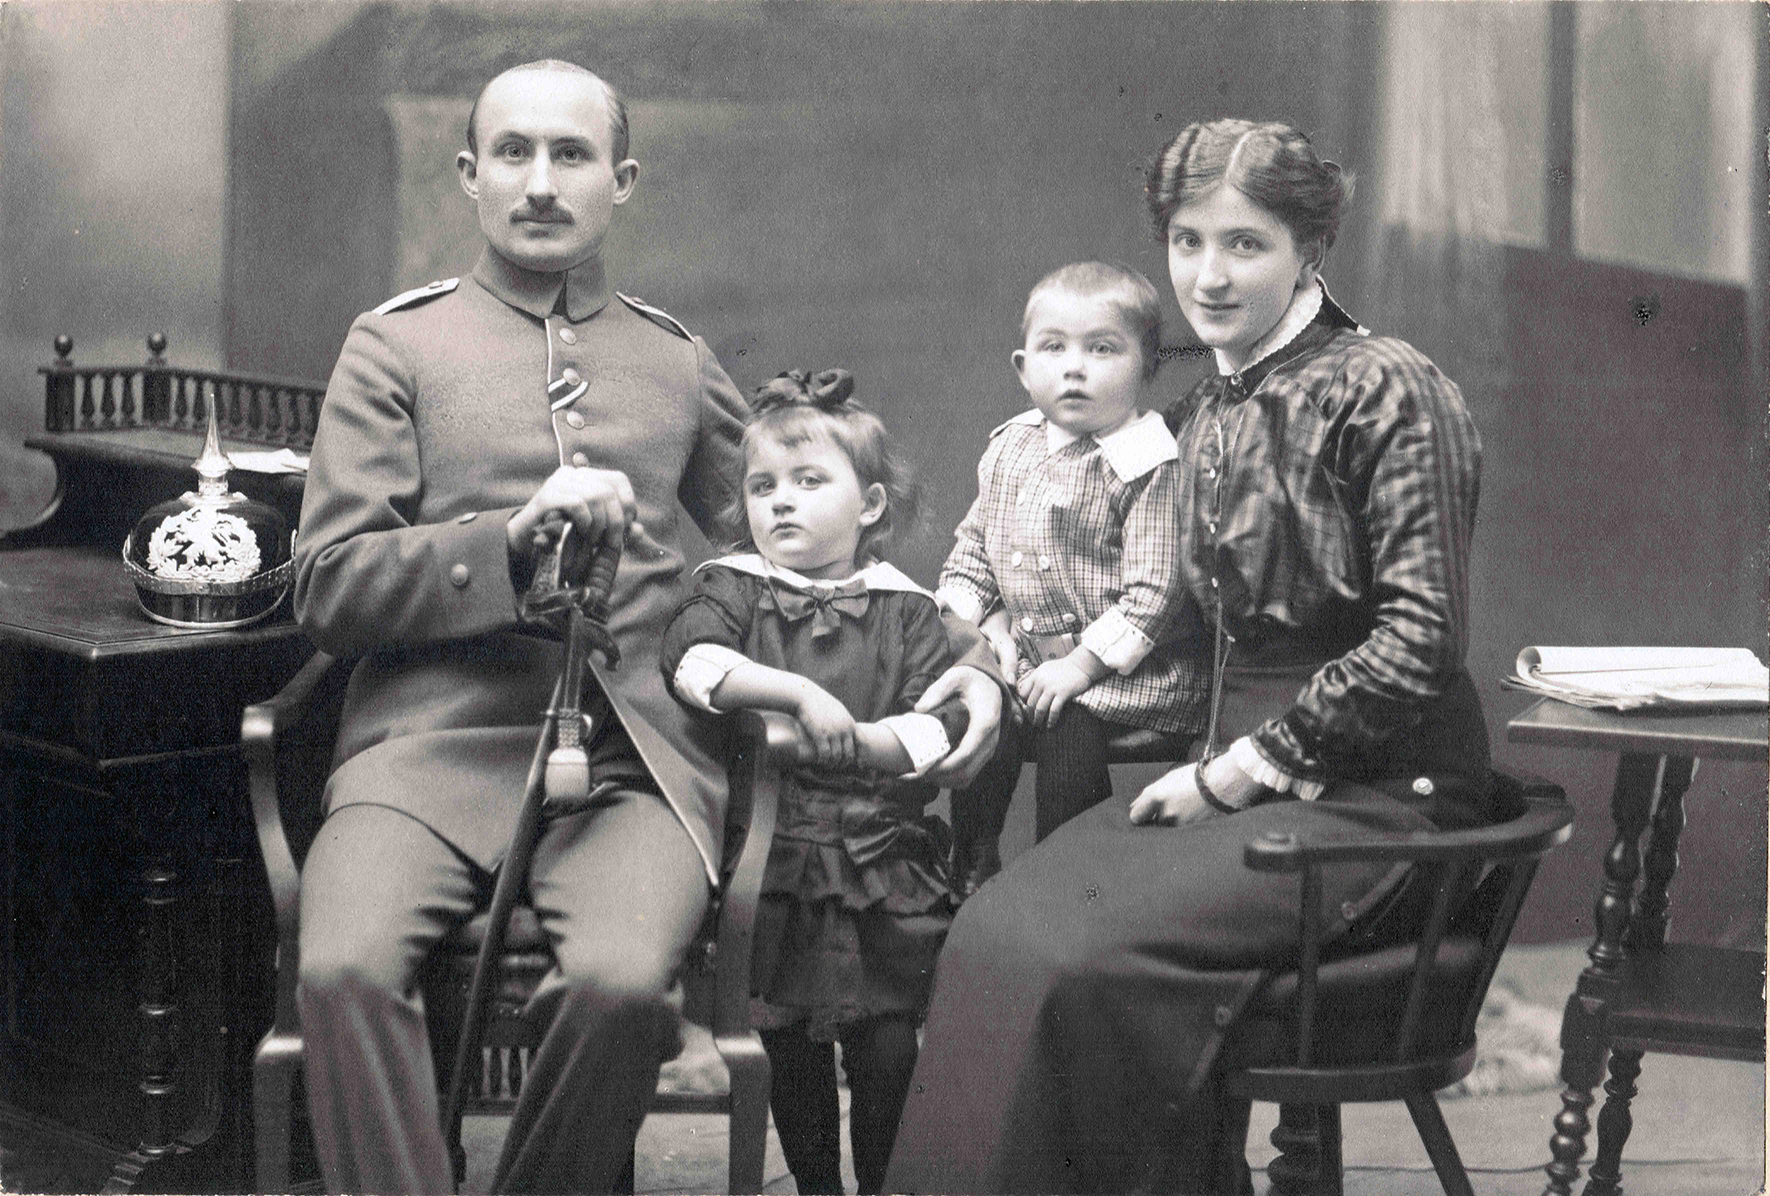 A black and white photograph of Christian Rau, Marie Rau, Walter Rau, and Emilie Rau, left to right.